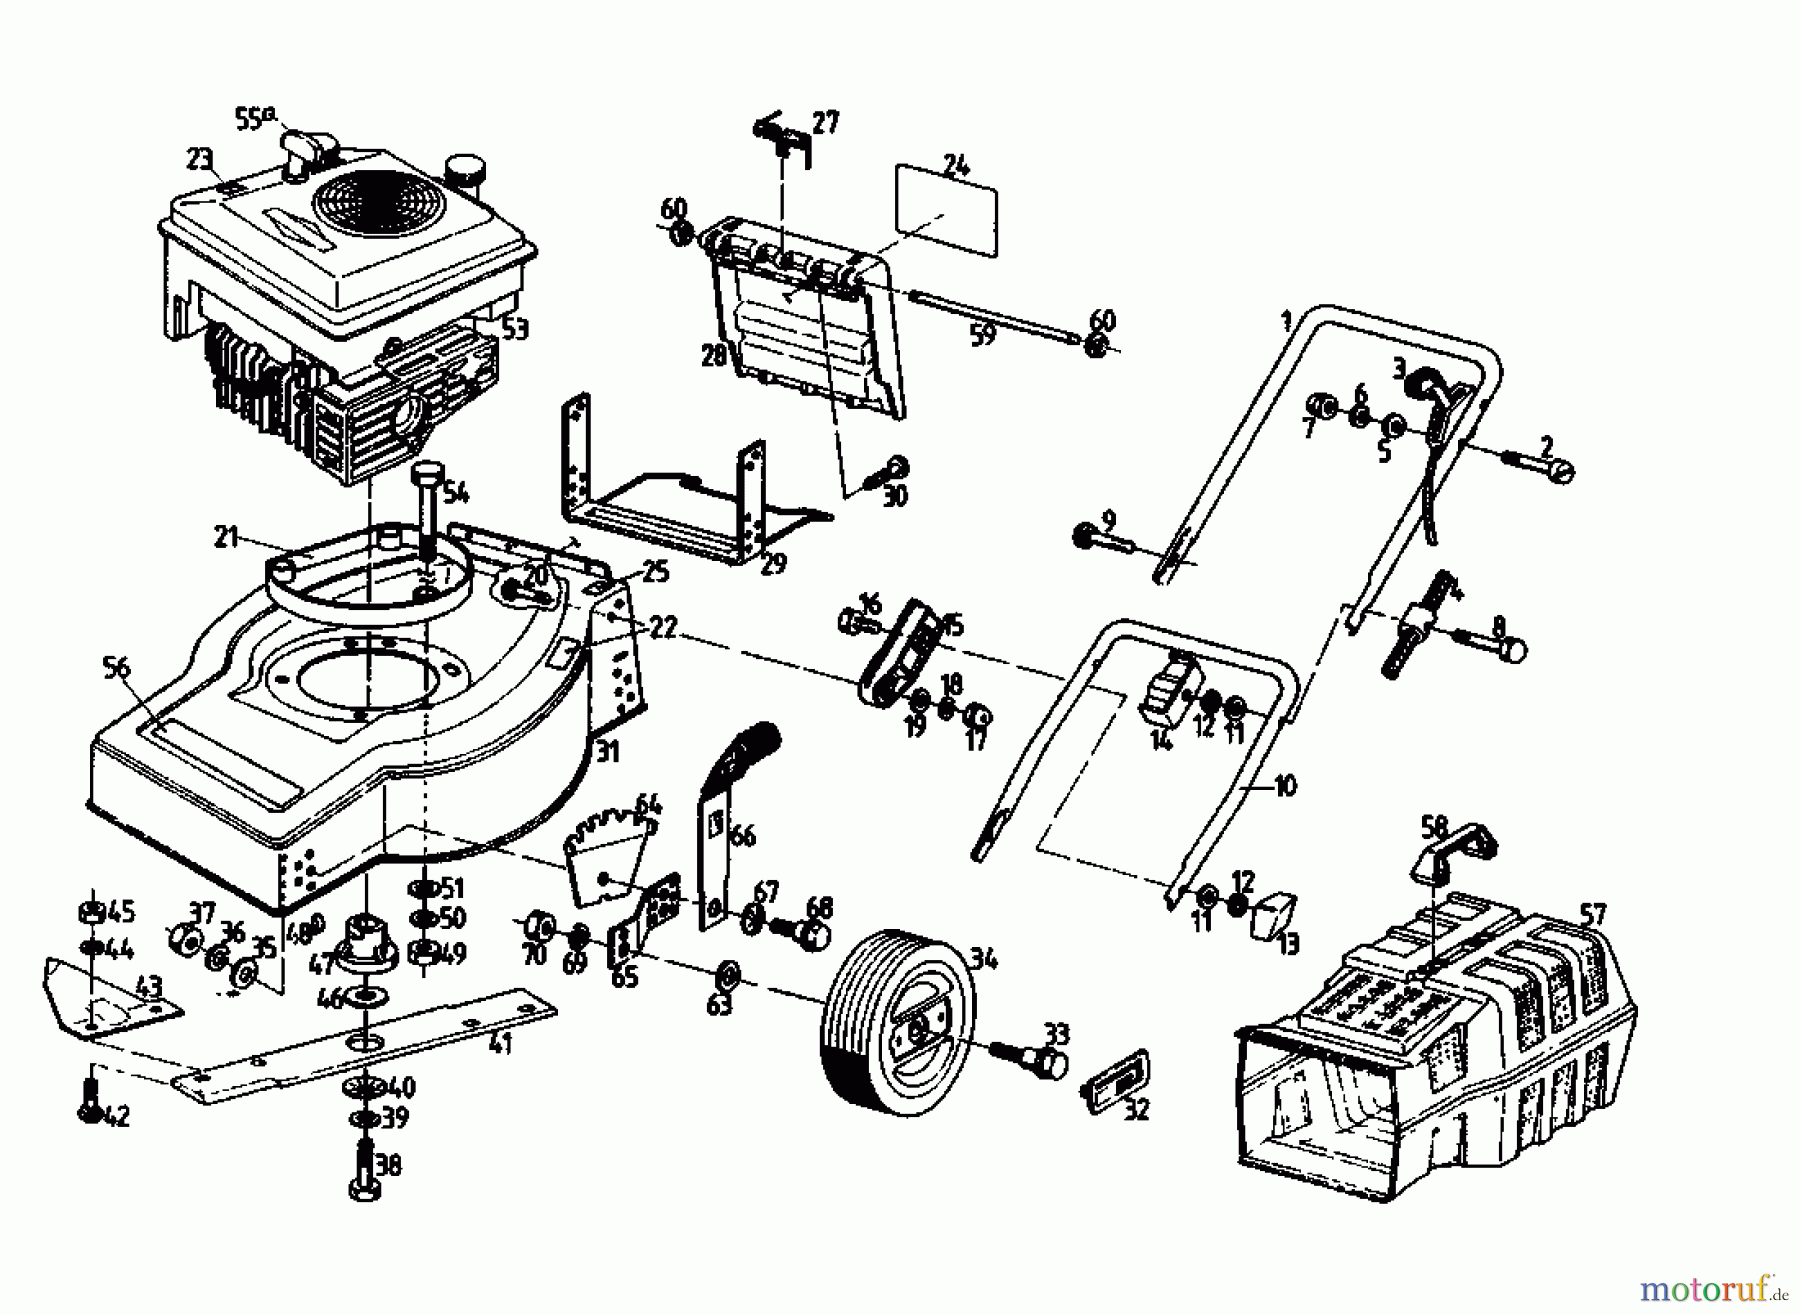  Gutbrod Motormäher TURBO B-Q 02893.03  (1988) Grundgerät